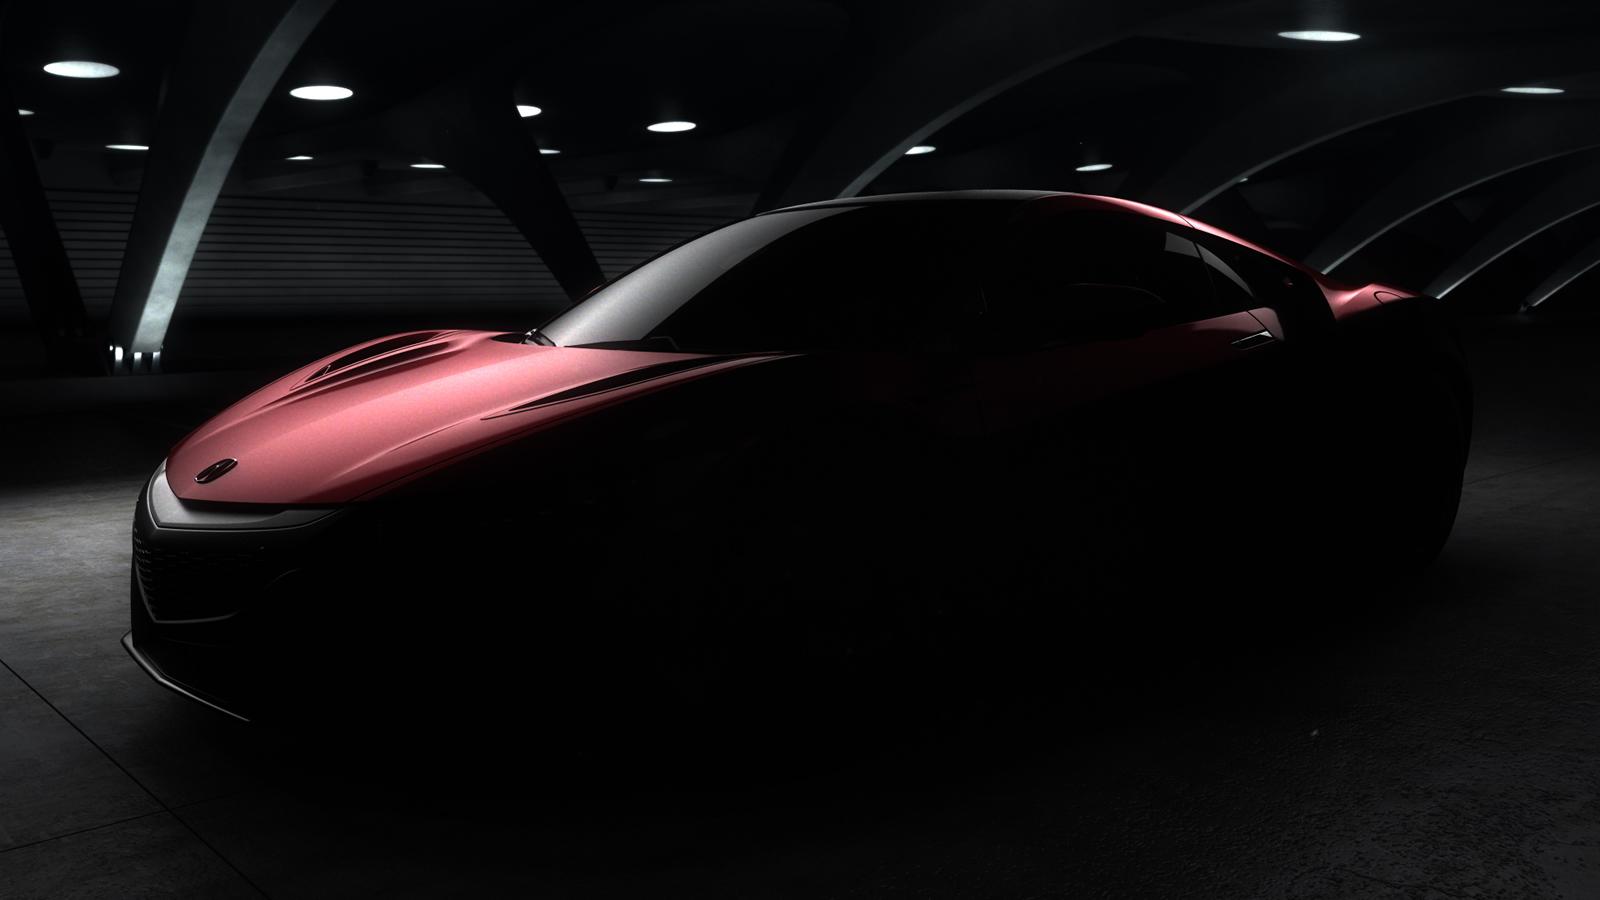 Nuova Honda NSX 2015, anteprima a Detroit: la scheda tecnica